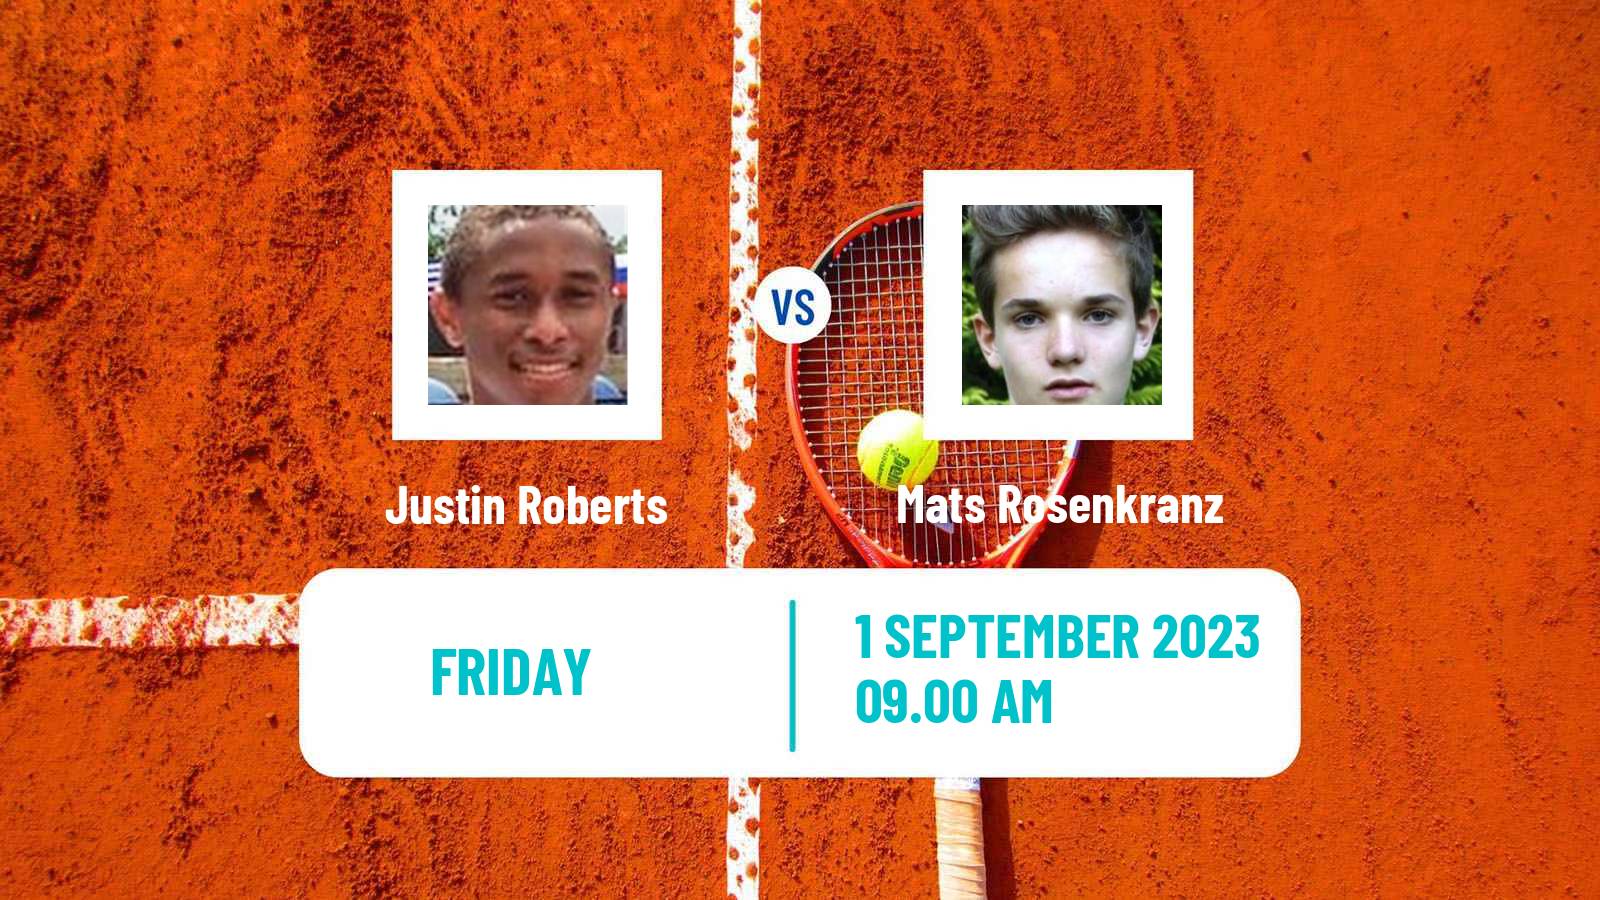 Tennis ITF M25 Oldenzaal Men Justin Roberts - Mats Rosenkranz